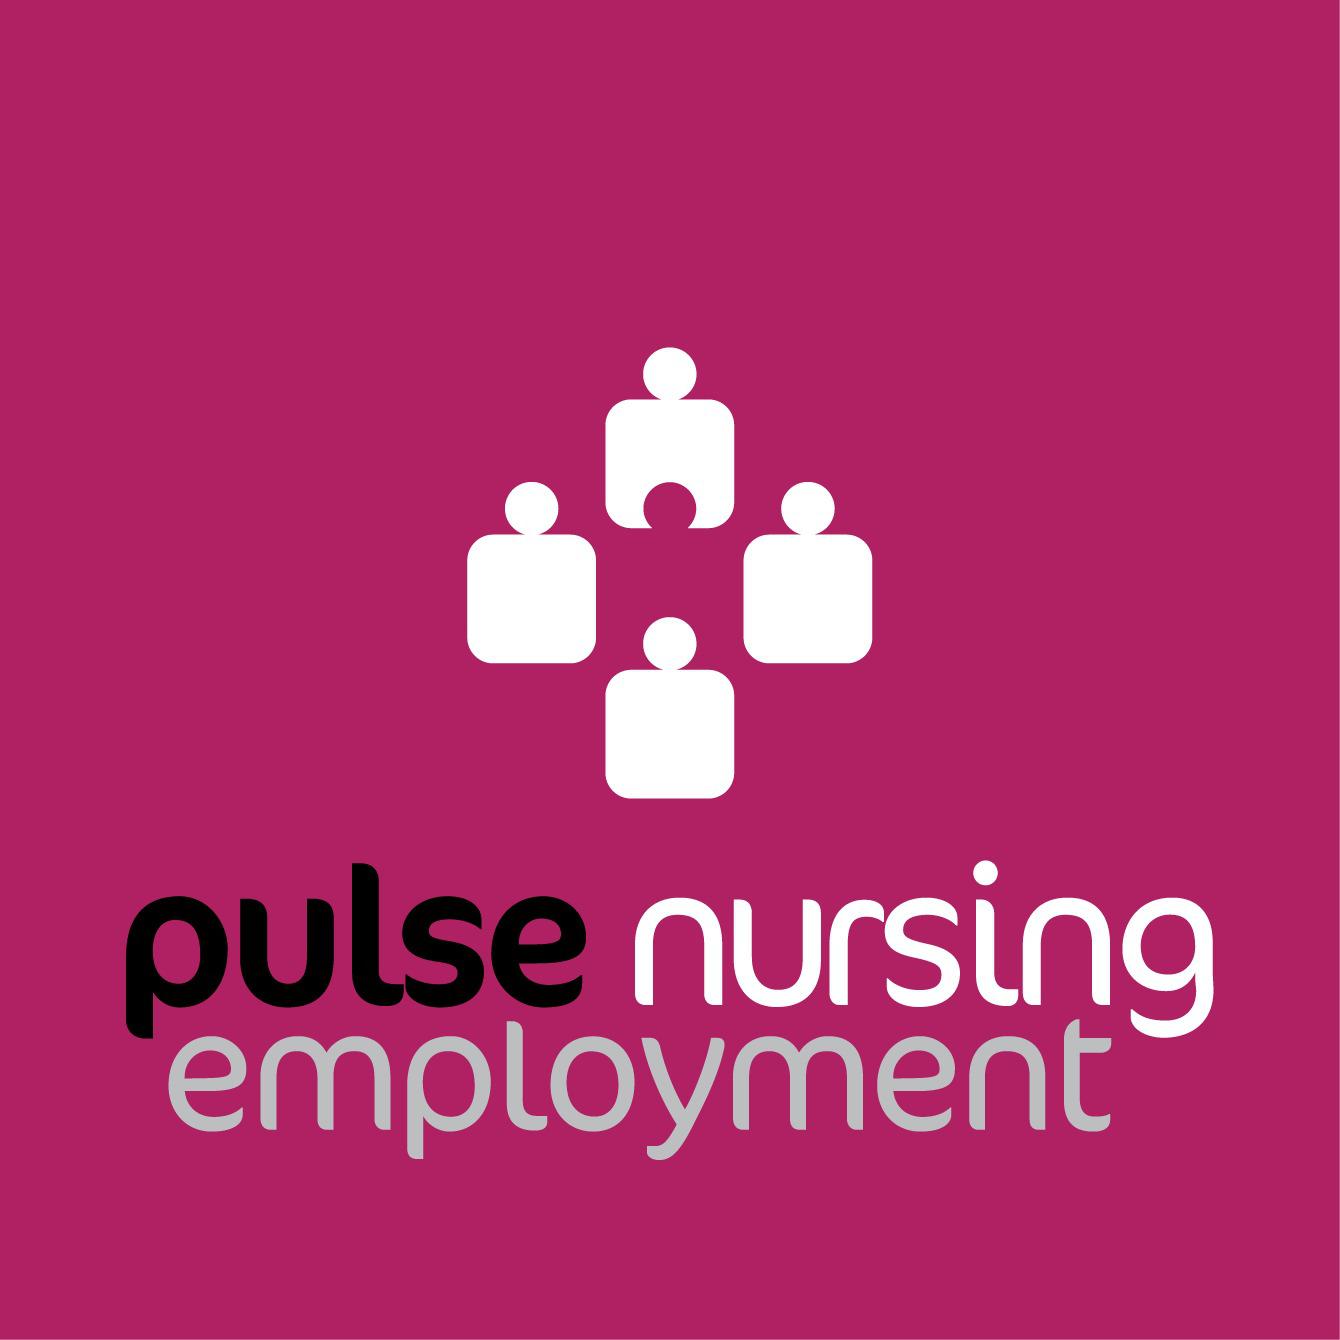 Pulse Nursing Employment - Launceston, TAS 7250 - 0407 005 516 | ShowMeLocal.com